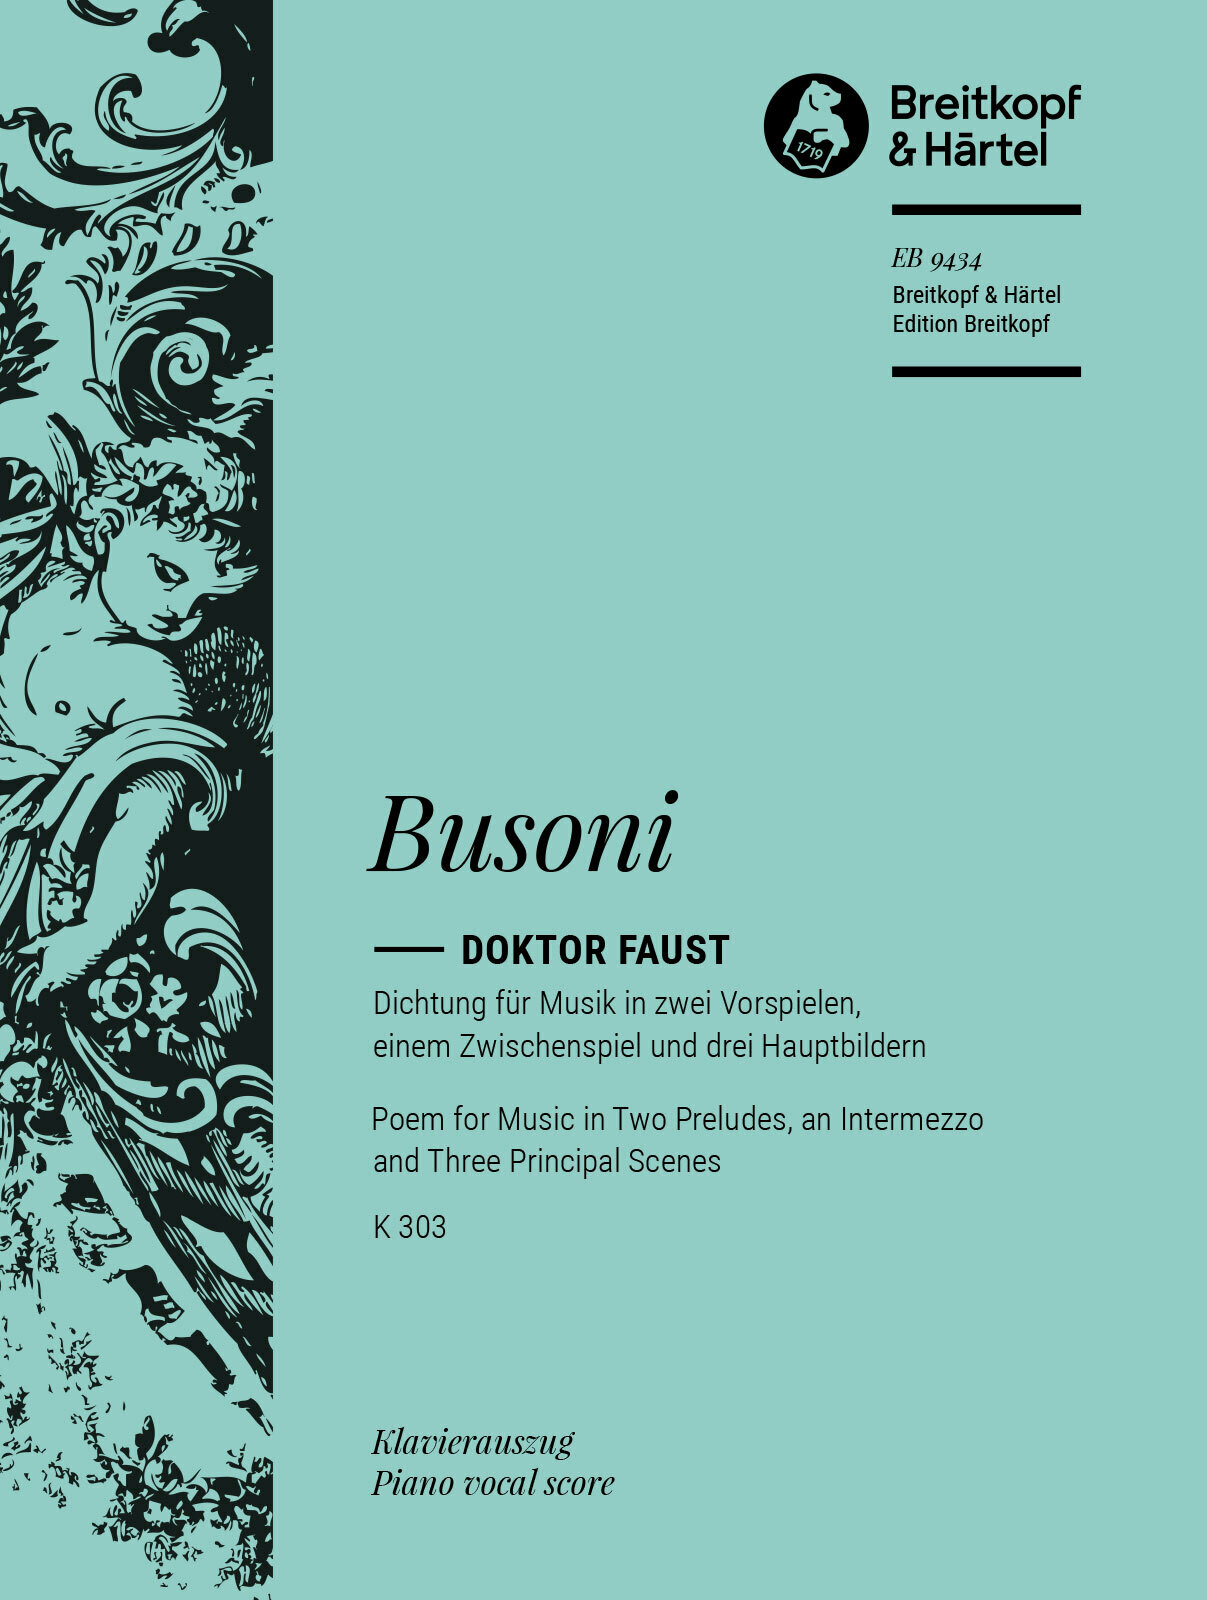 Busoni Doktor Faust Vocal Score Sheet Music Songbook